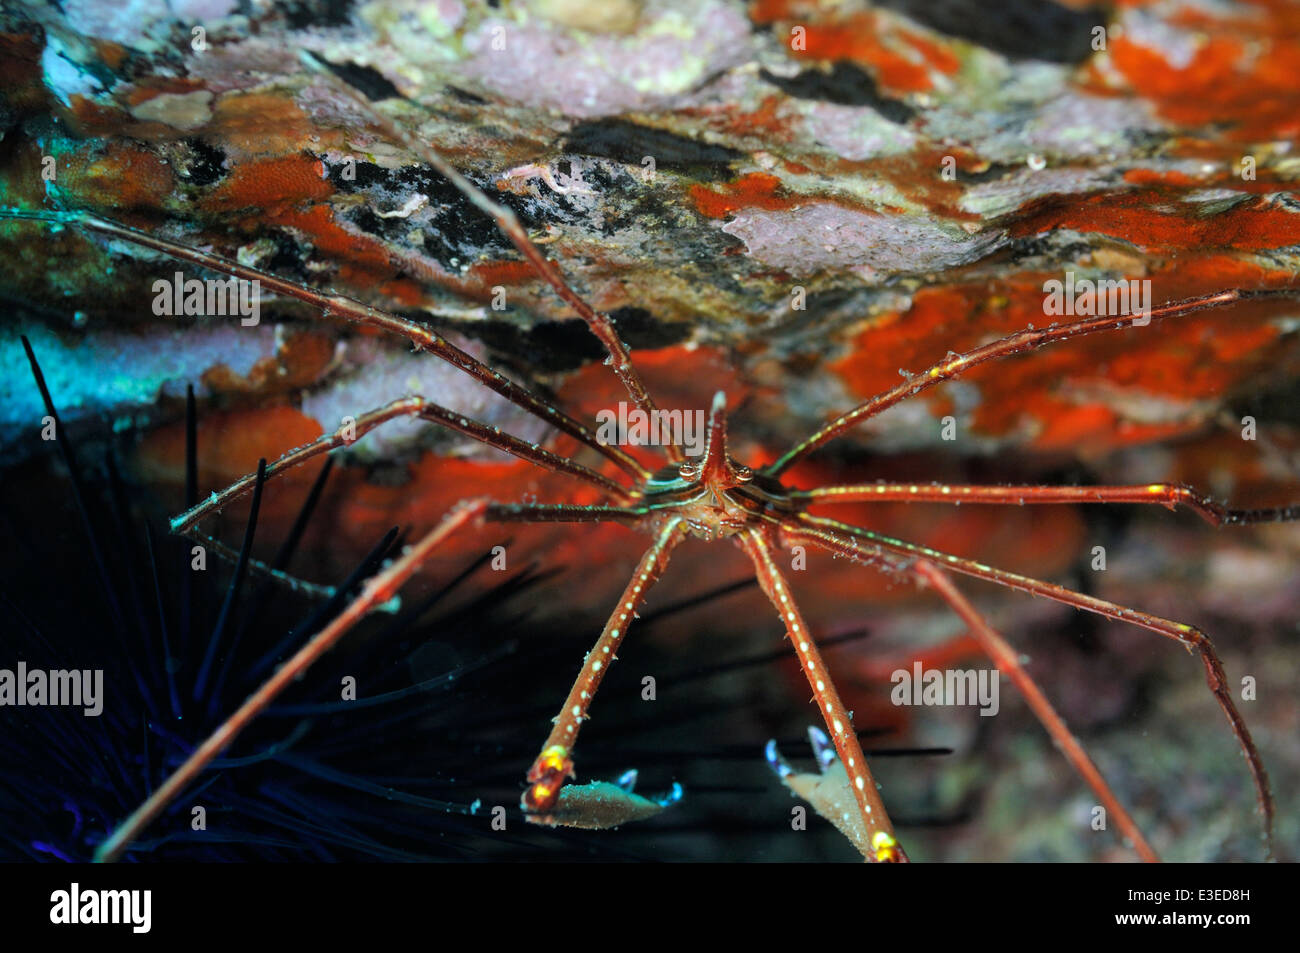 Arrow crab on rock with red encrusting sponge, Tenerife Stock Photo